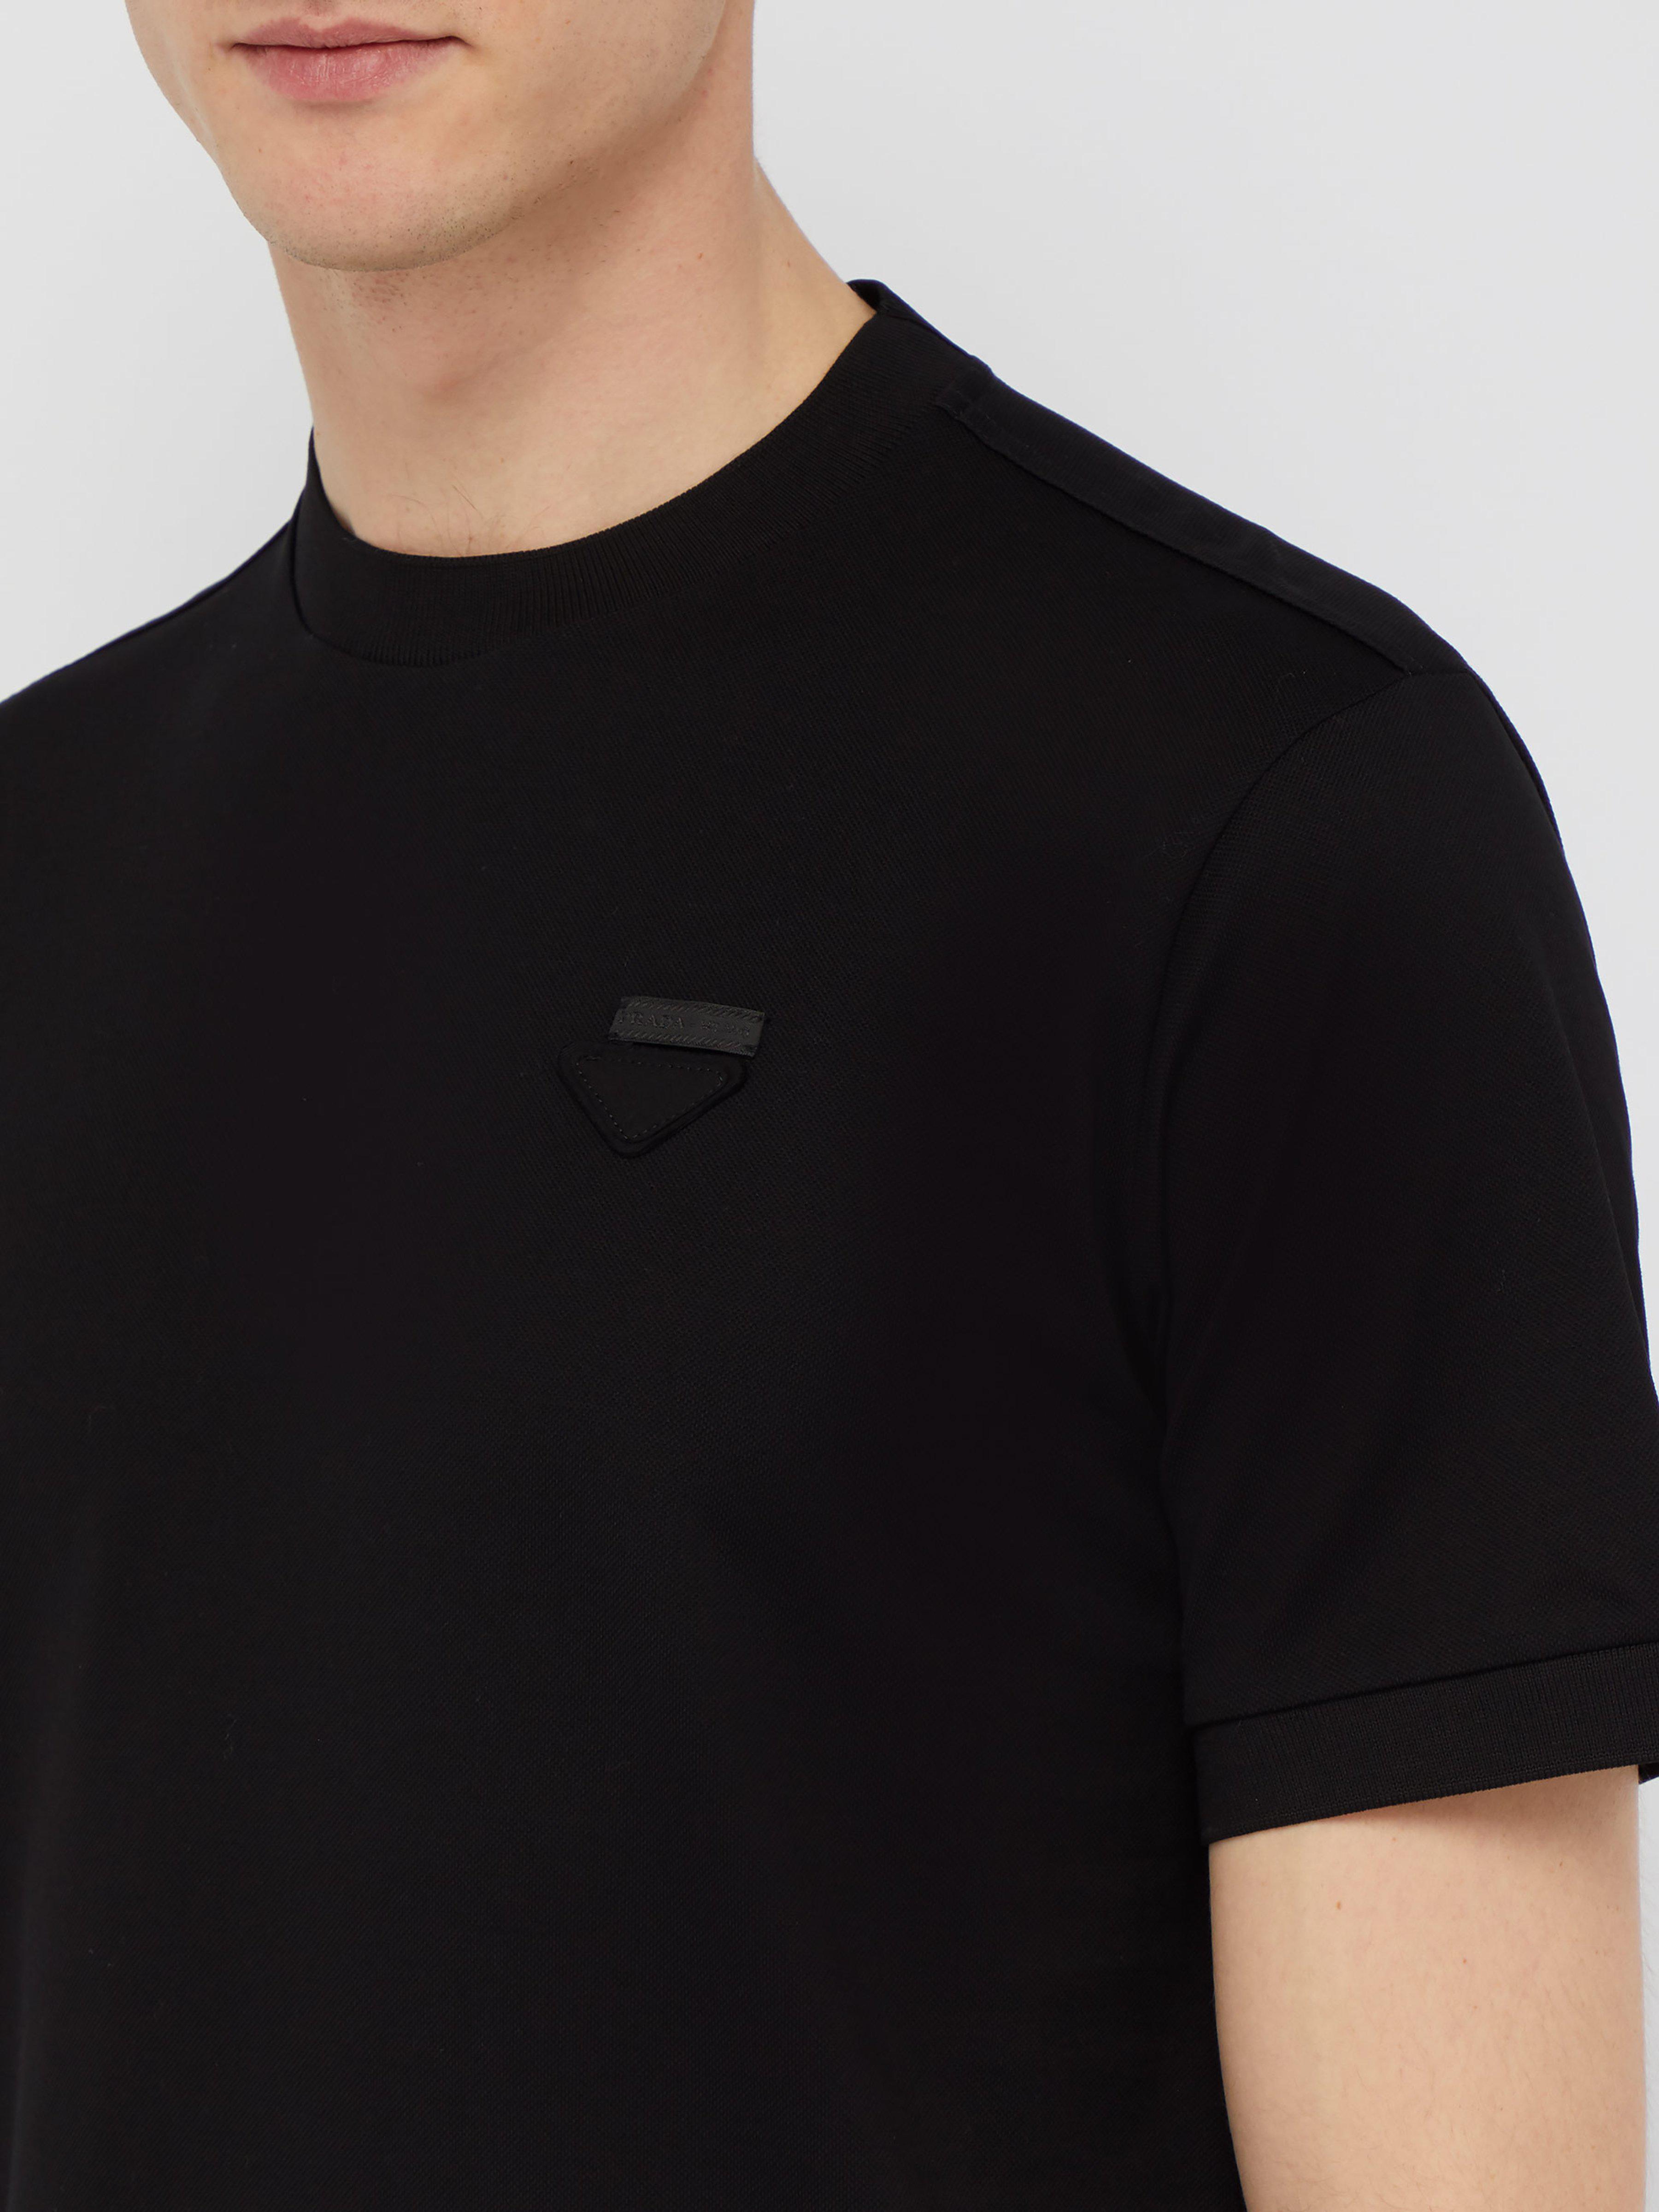 Prada Cotton Logo Piqué T-shirt in Black for Men - Lyst